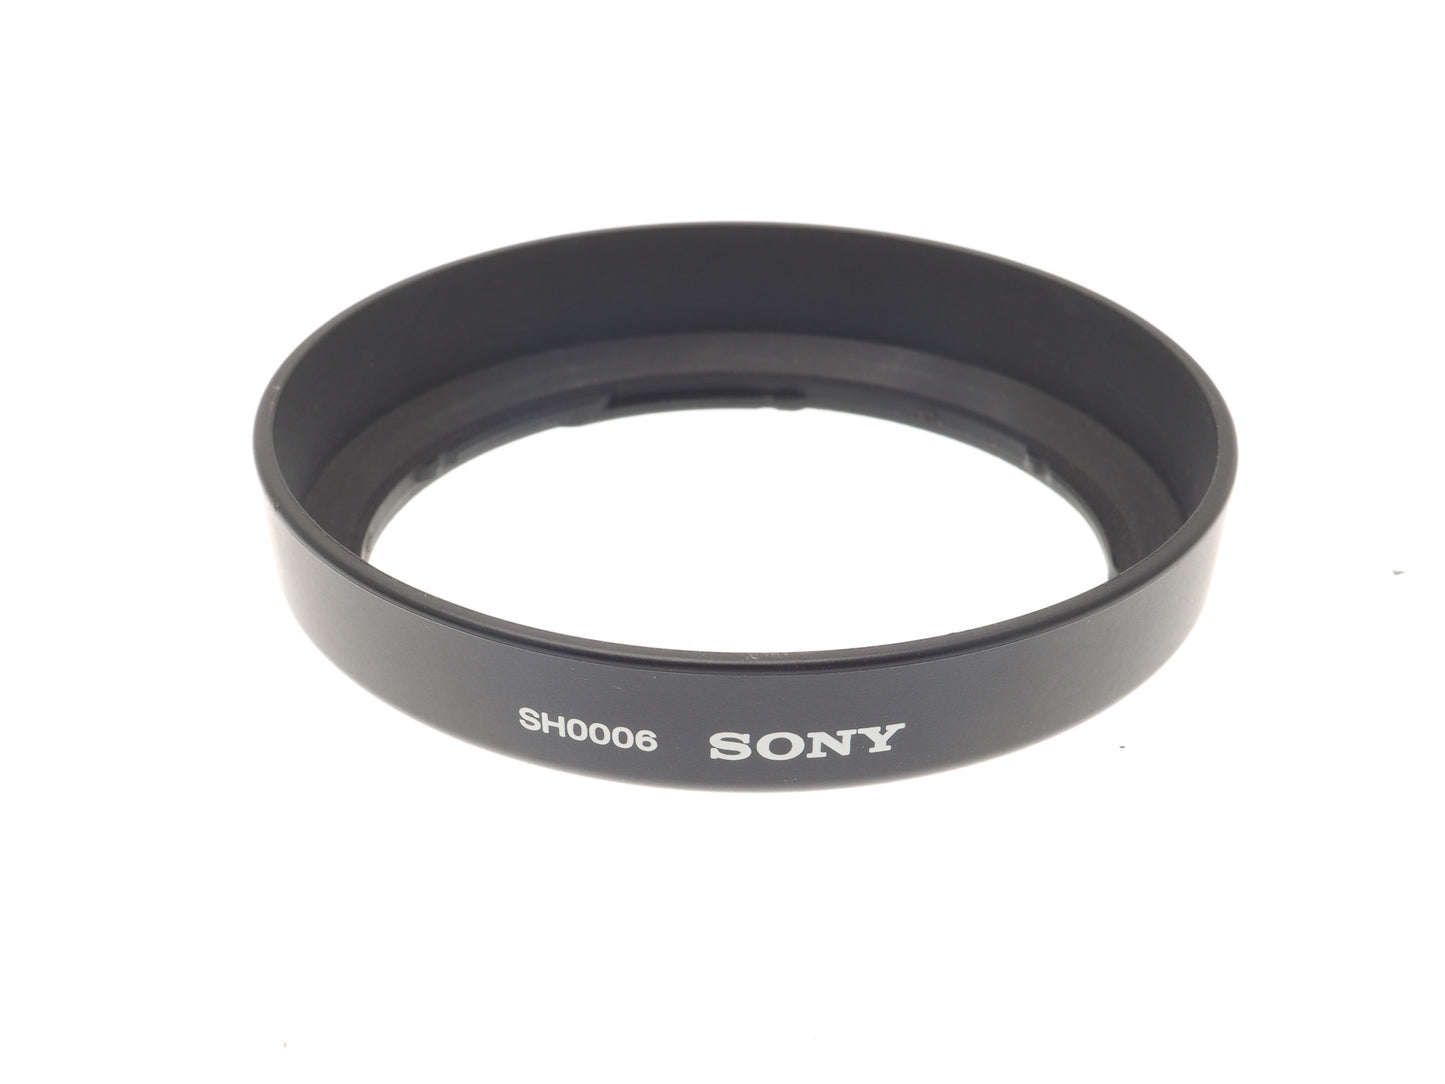 Sony ALC-SH0006 Lens Hood for Sony 18-70mm f3.5-5.6 - Accessory